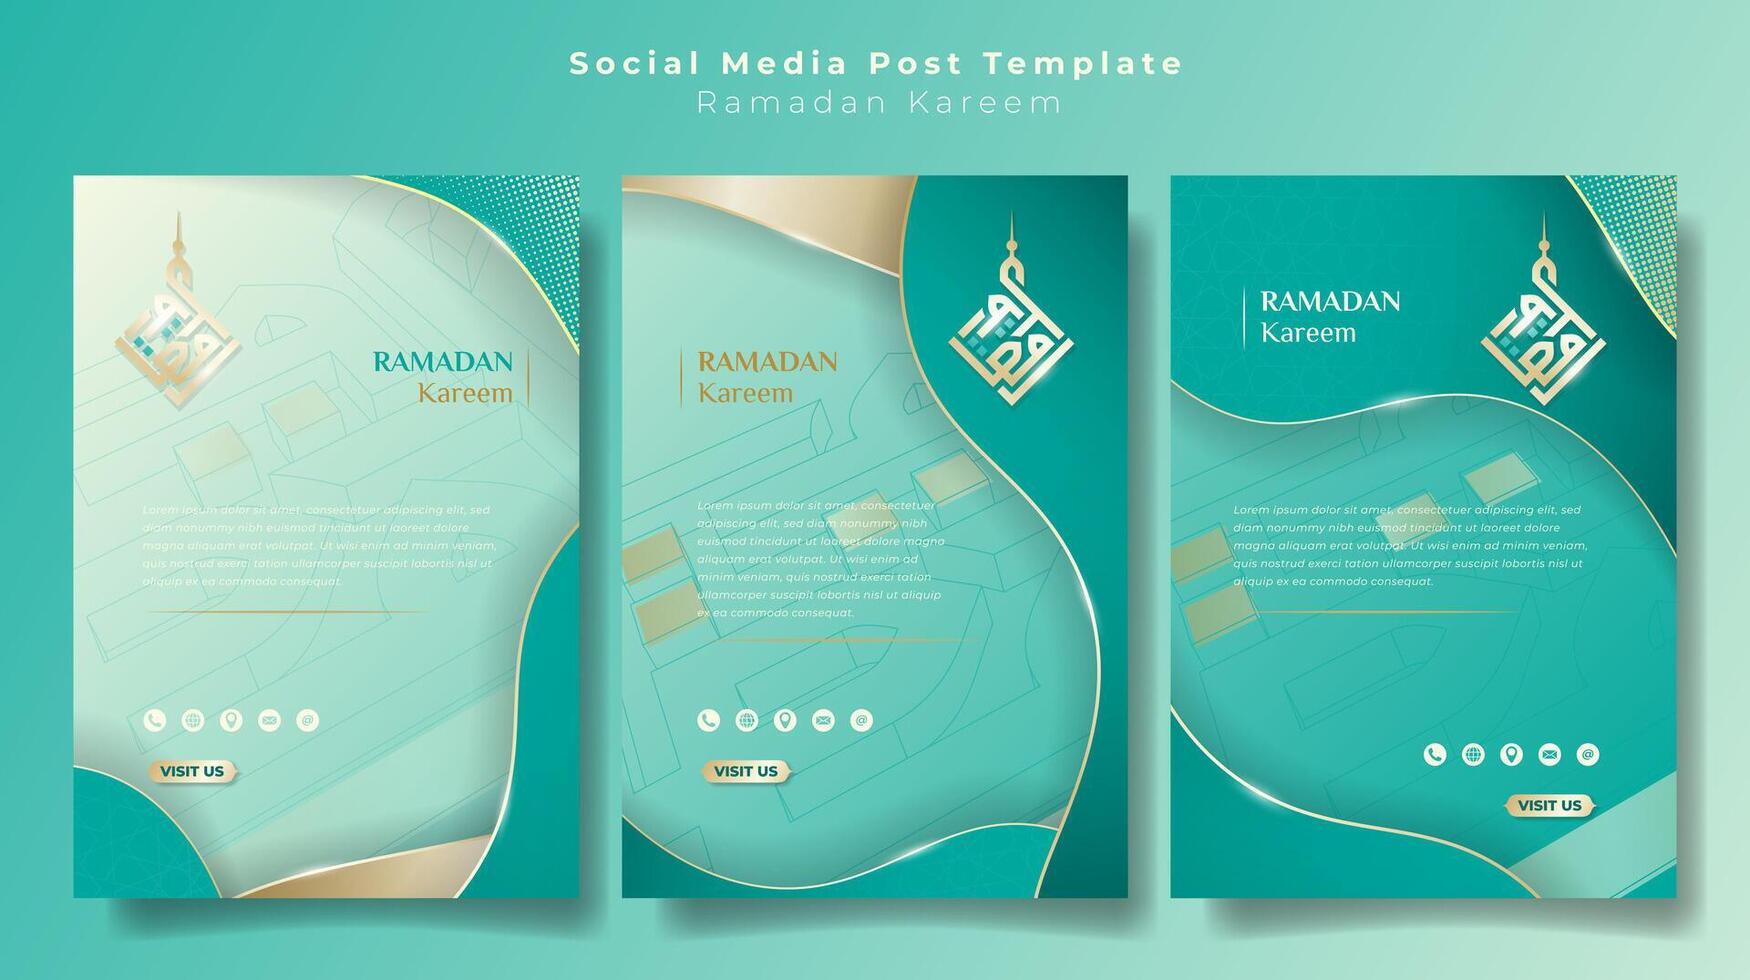 Social media post template in portrait design with arabic calligraphy design for ramadan kareem campaign. Arabic text mean is ramadan kareem. Islamic background in light sea green vector